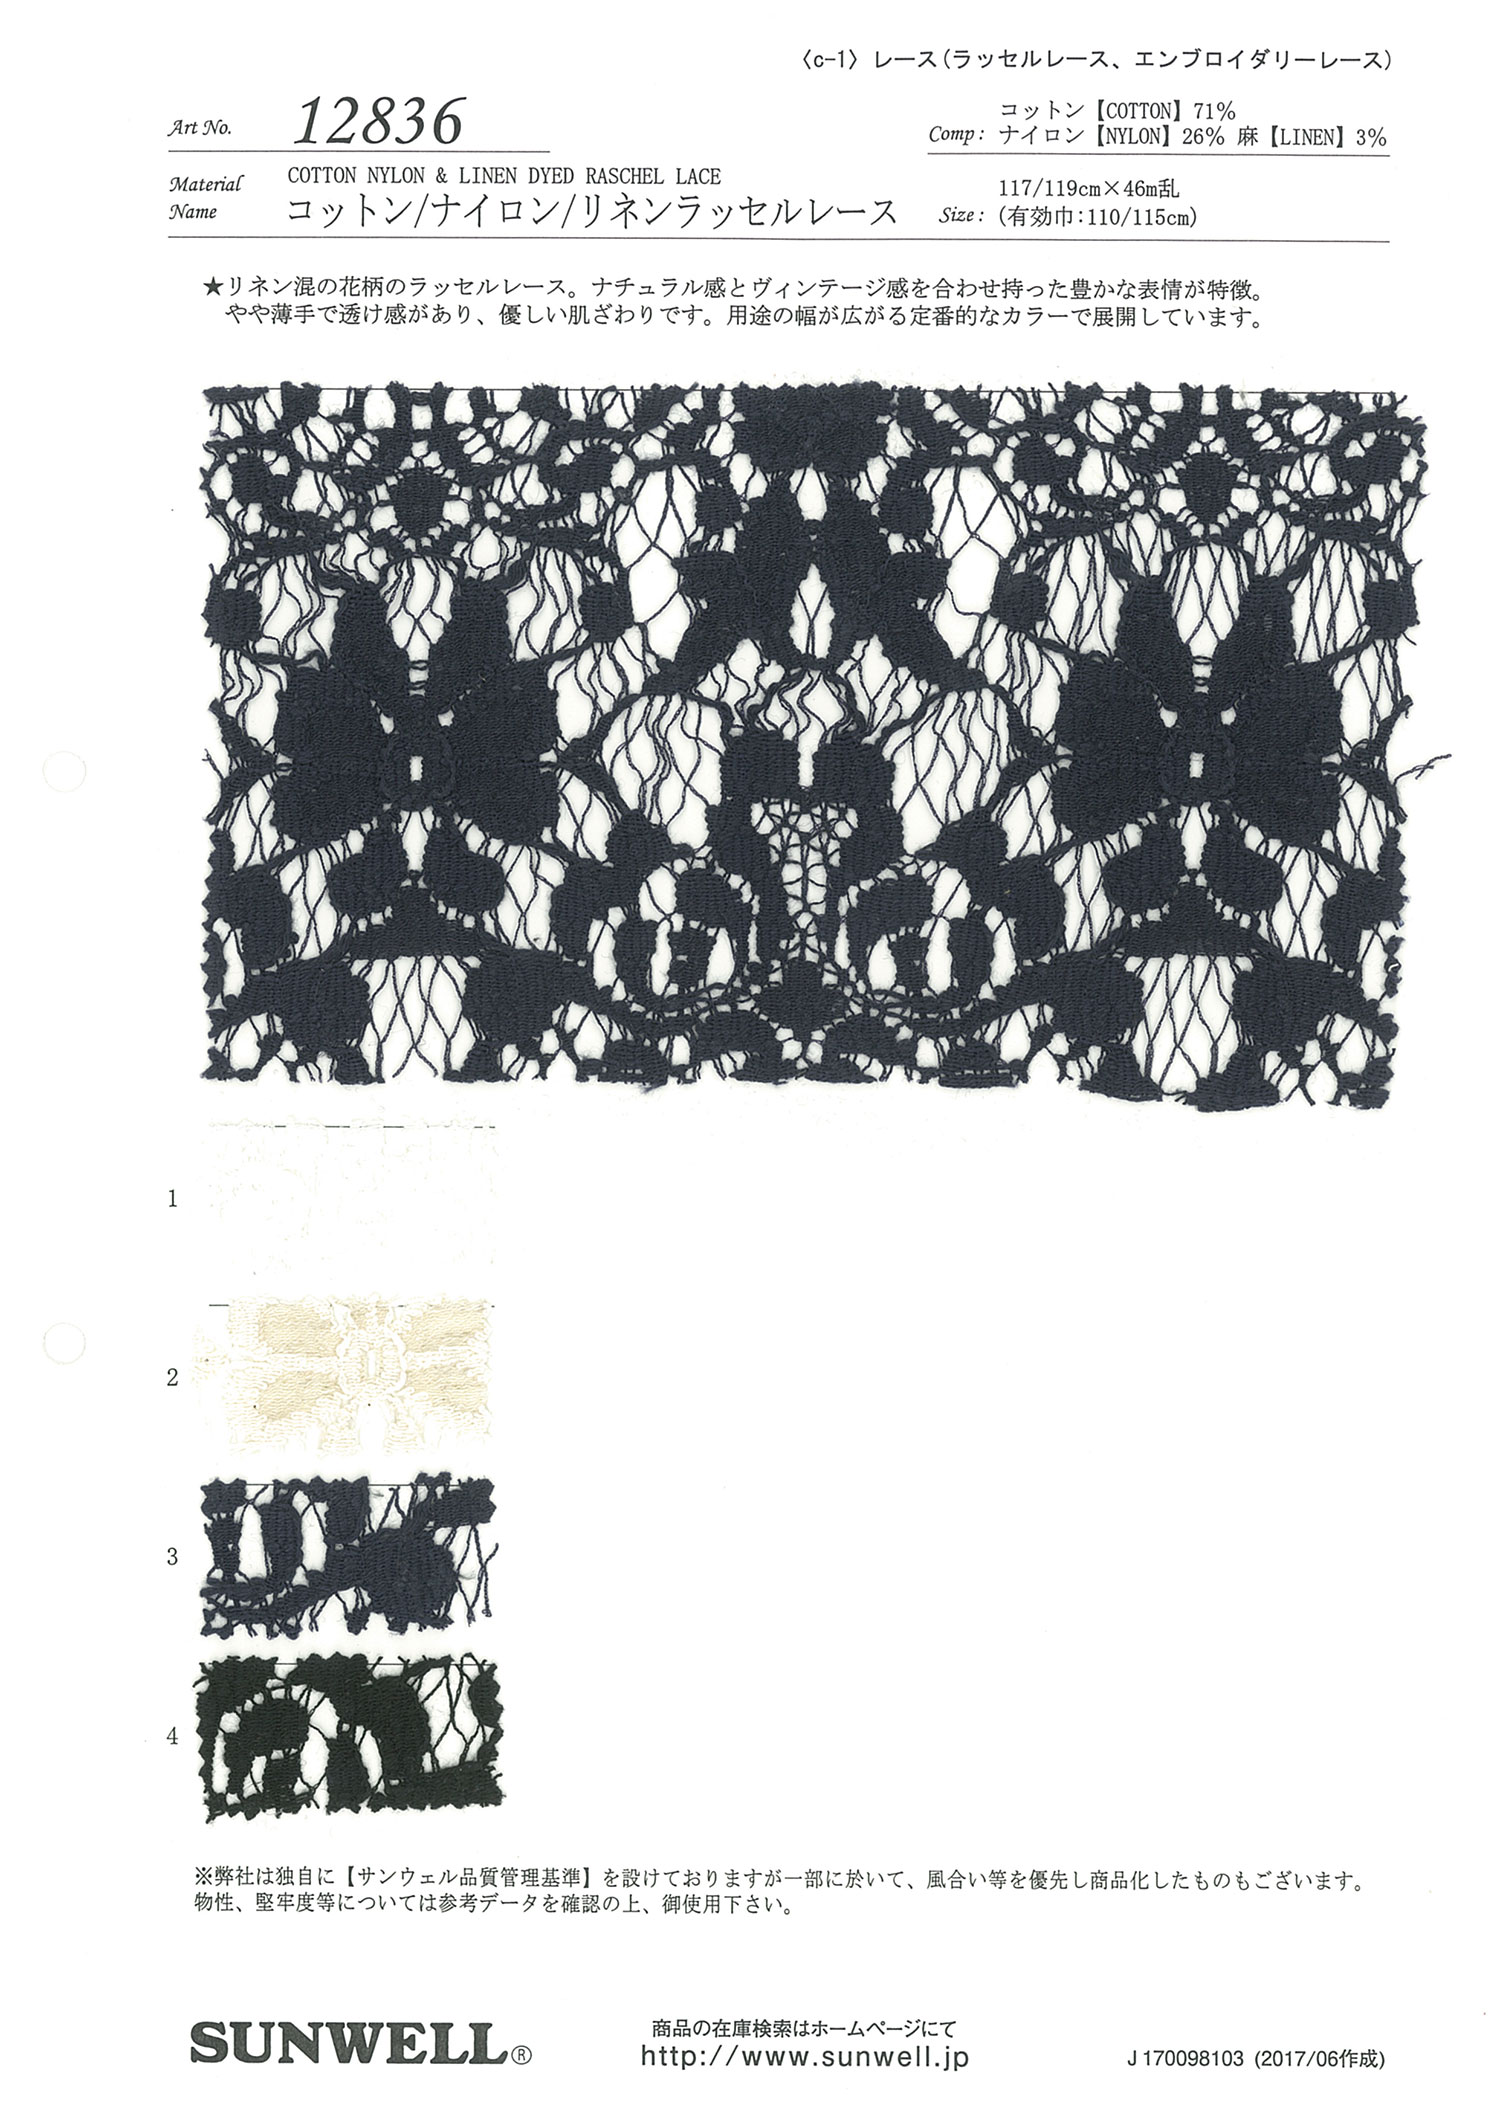 12836 Cotton / Nylon / Linen Raschel Lace SUNWELL